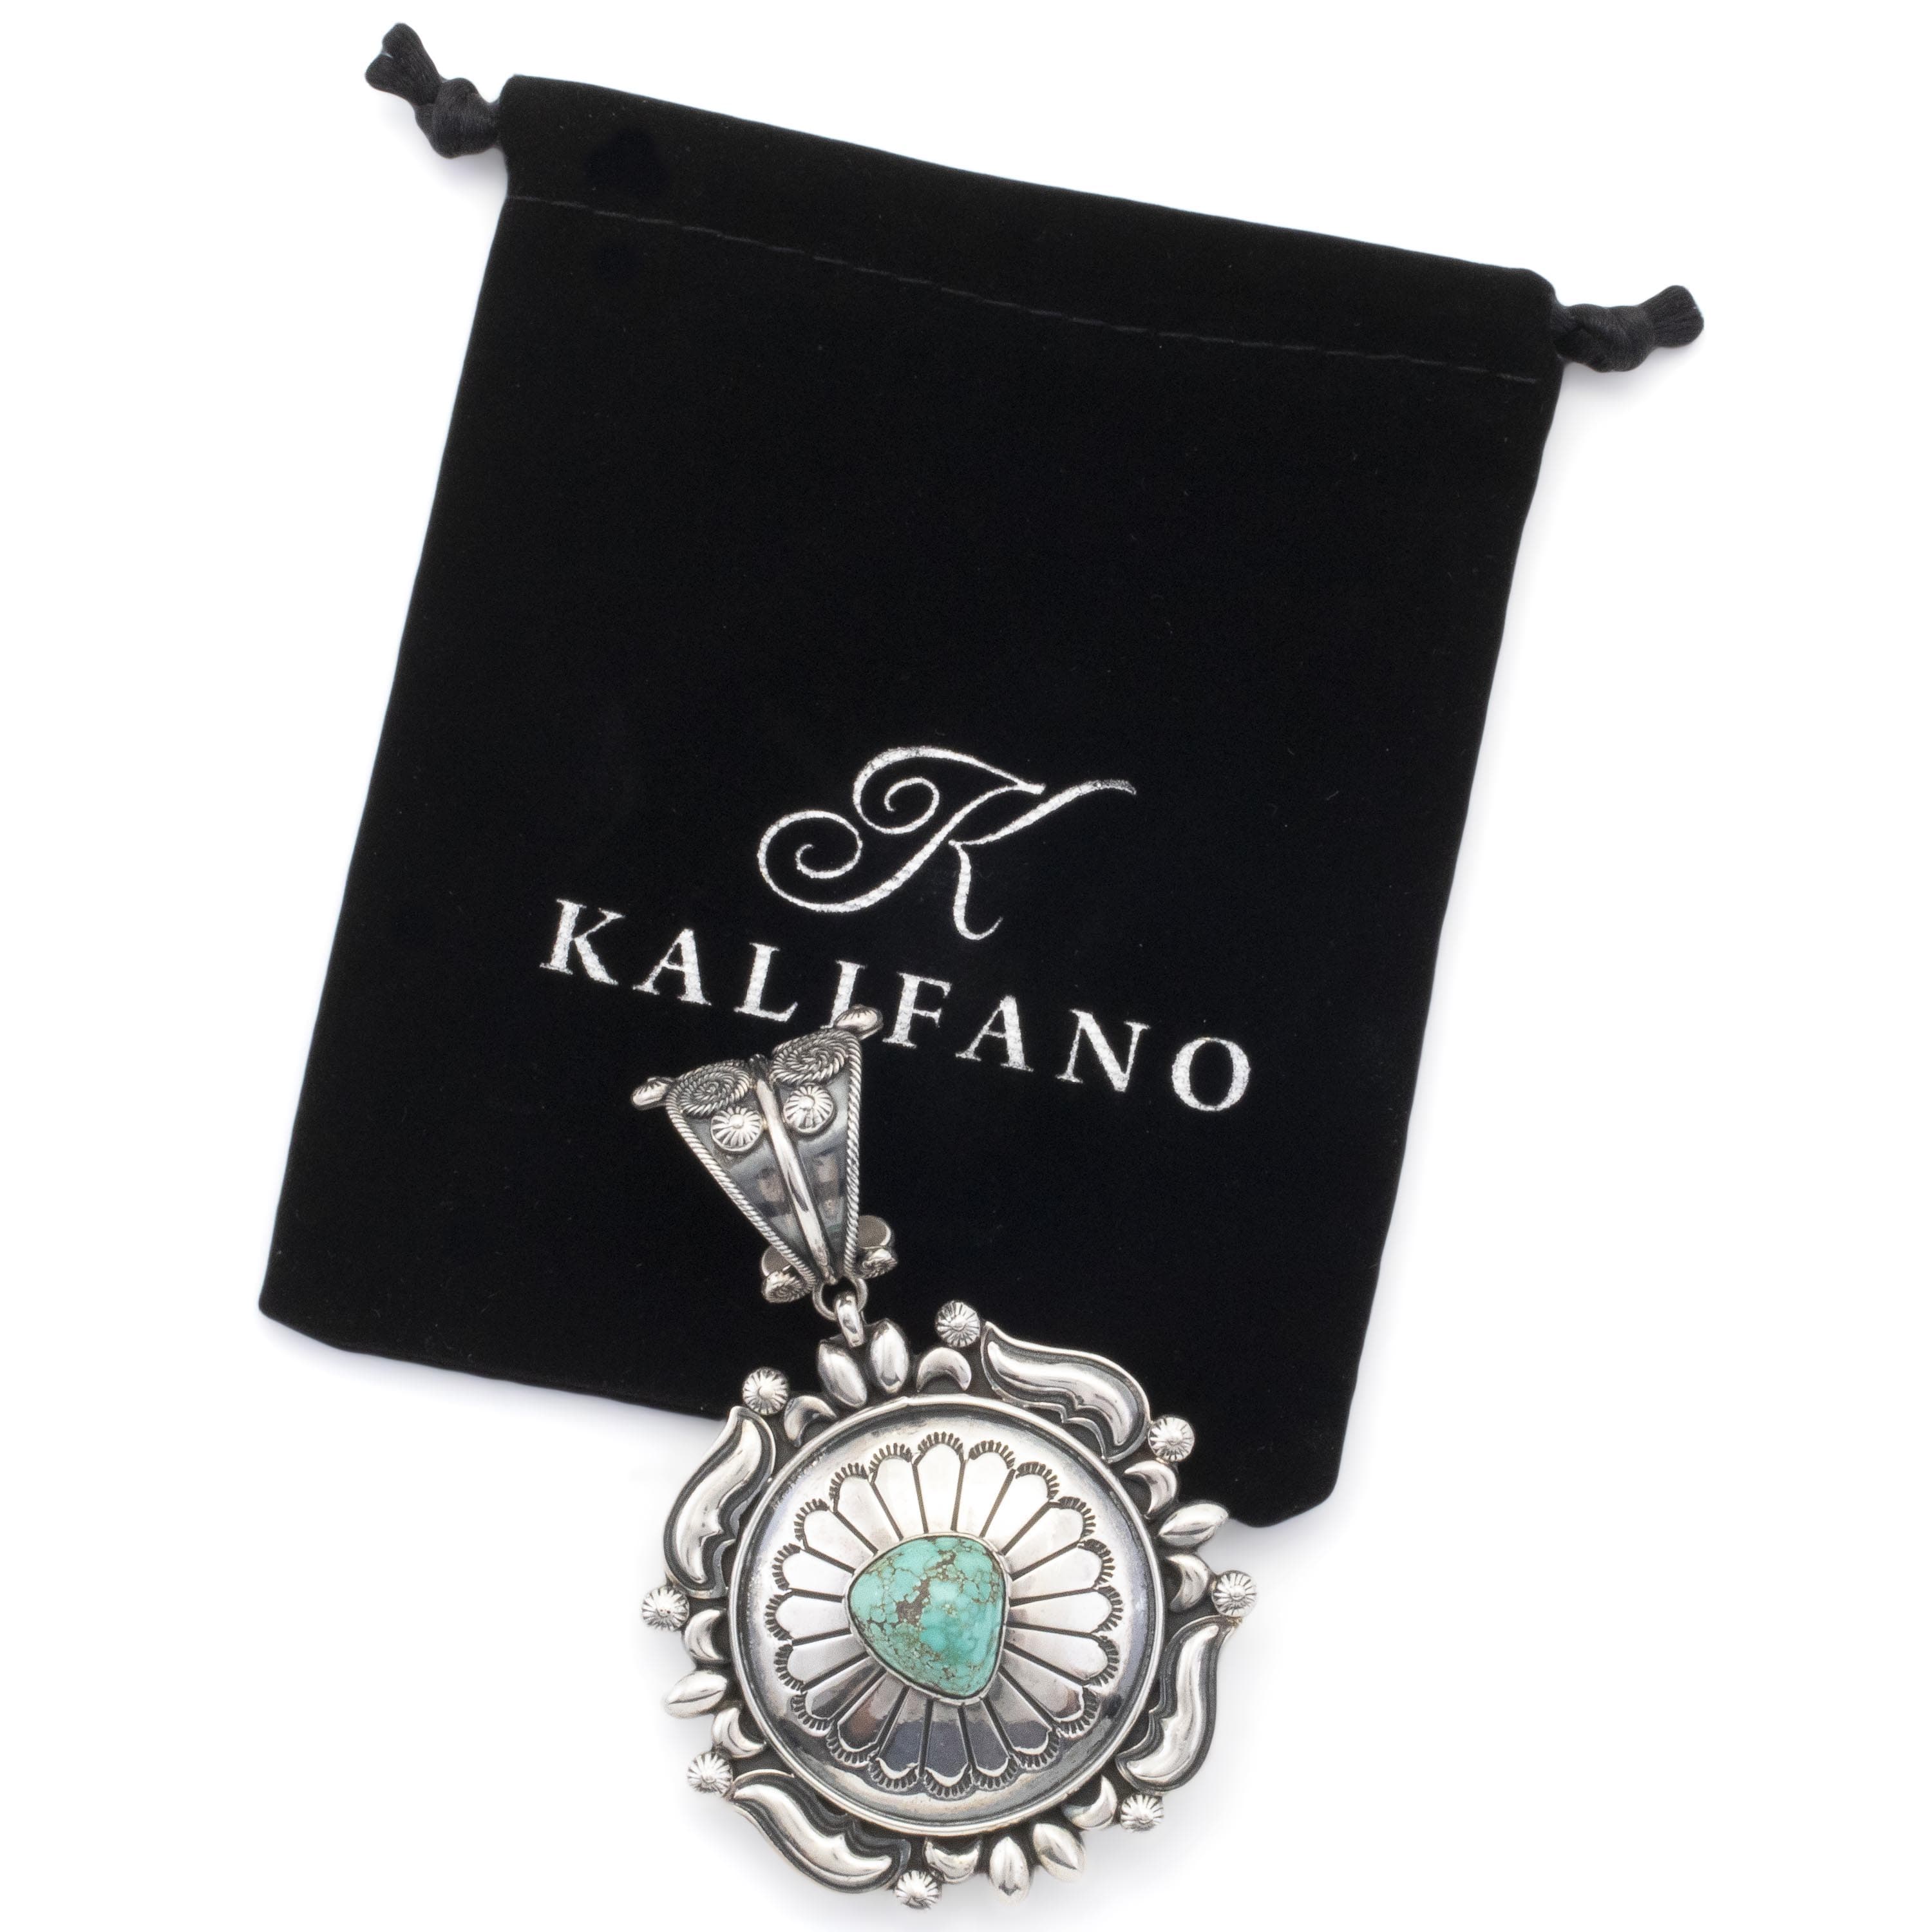 Kalifano Native American Jewelry Danny Clark Navajo Carico Lake Turquoise USA Native American Made 925 Sterling Silver Pendant NAN2400.013